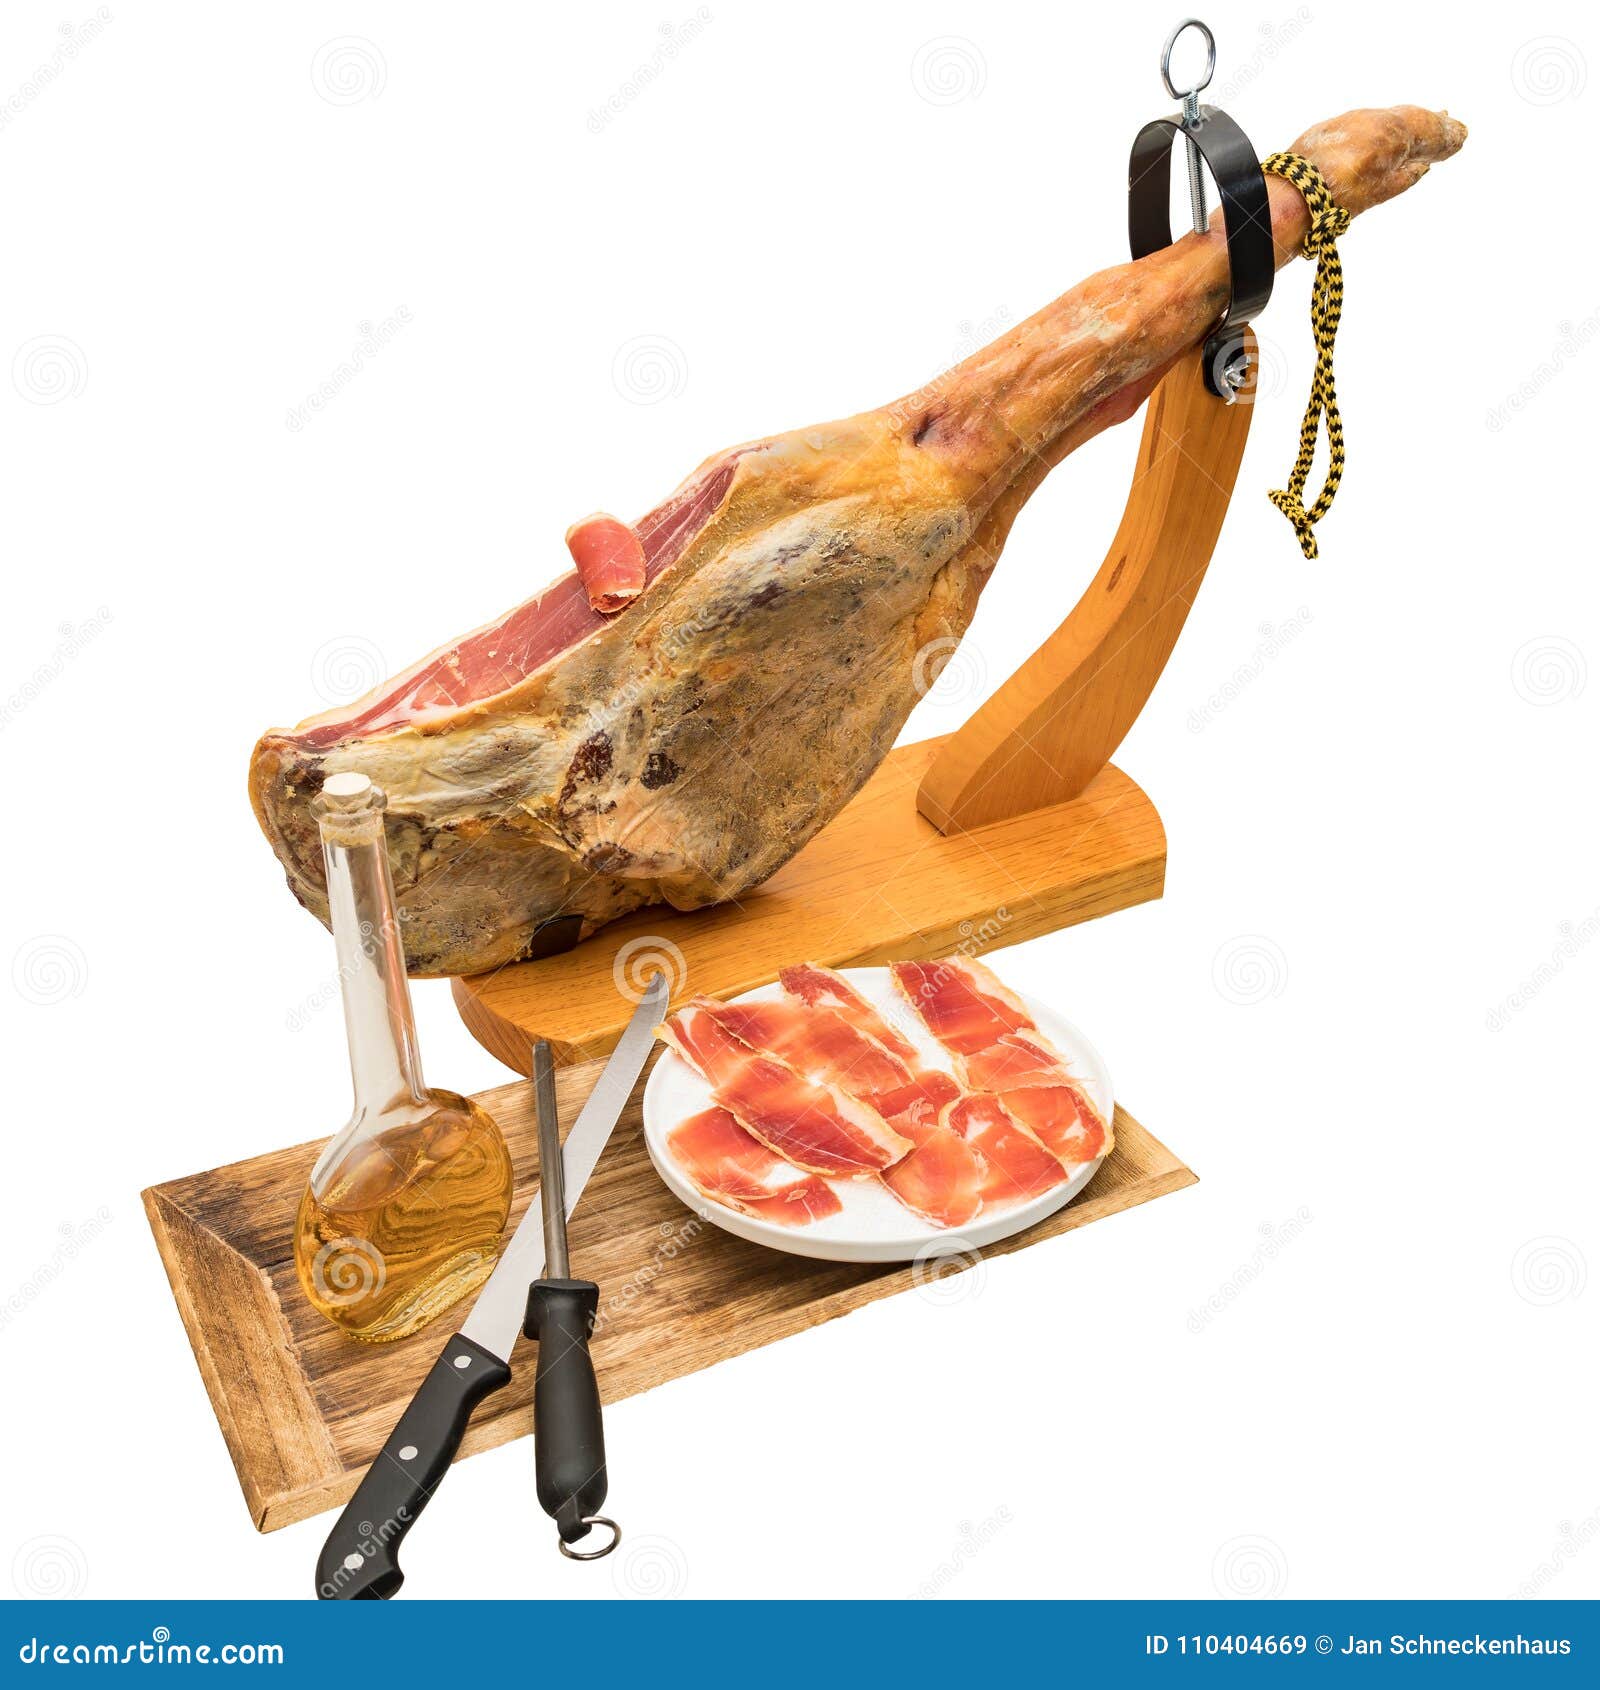 spanish serrano ham on the leg with wood holder.